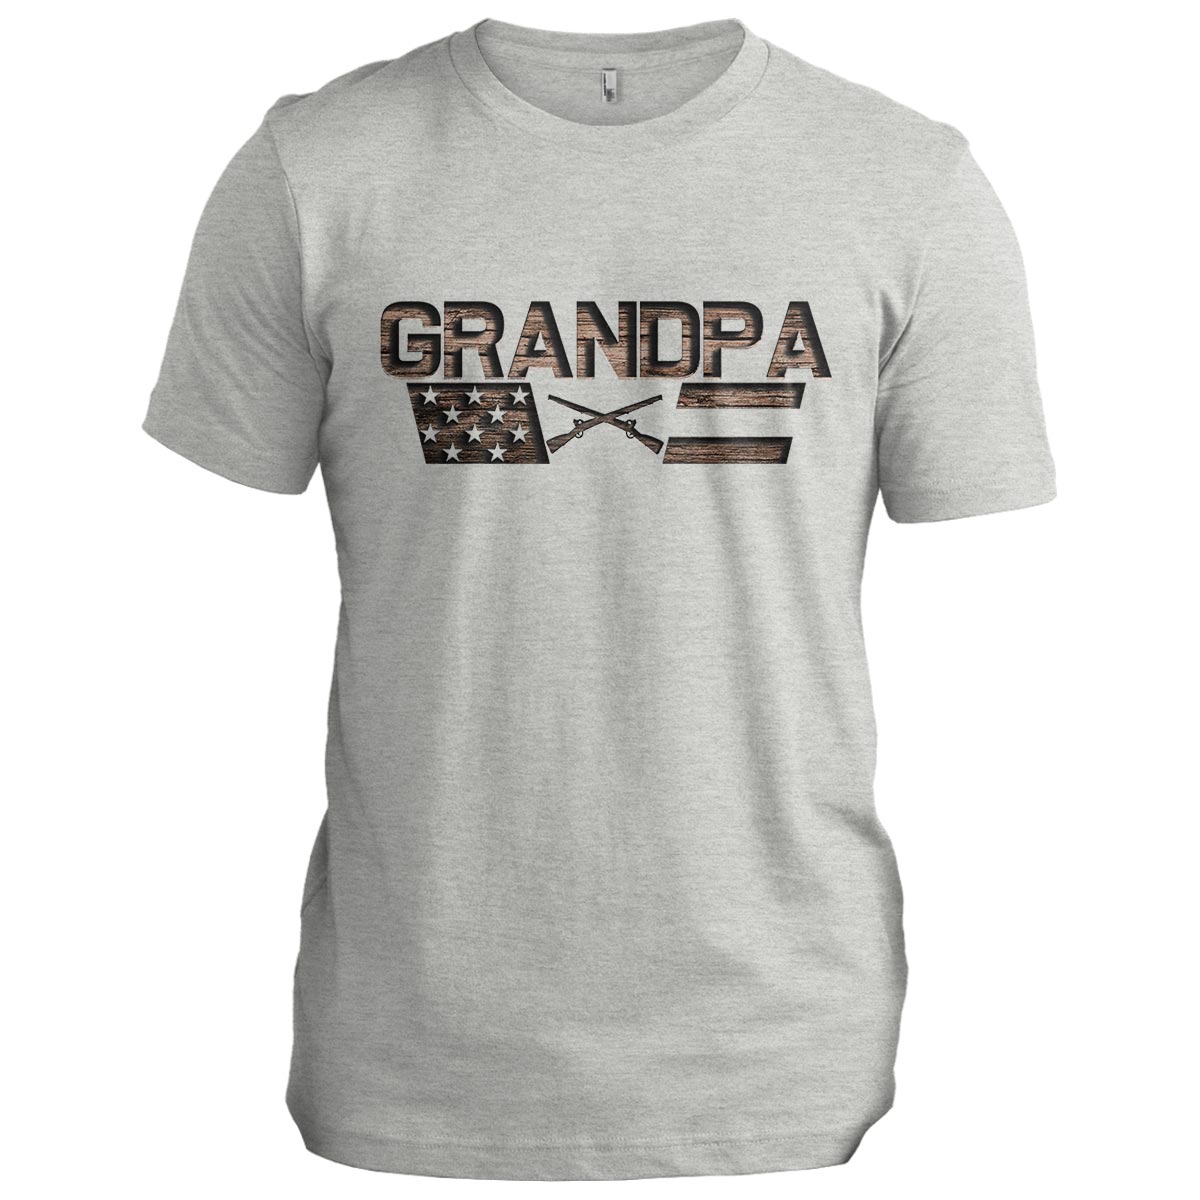 grandpa: Strong as Oak